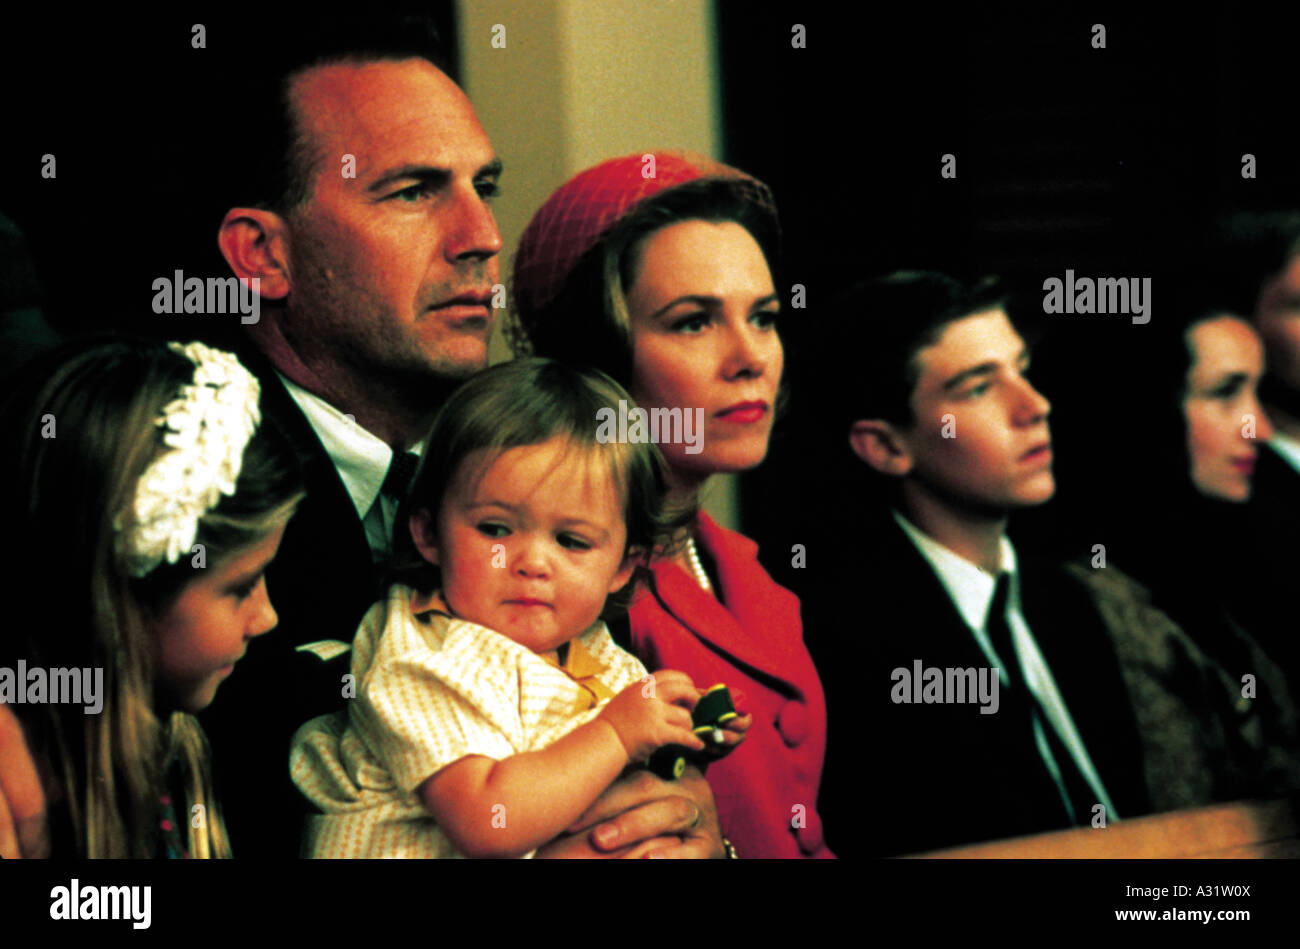 DREIZEHN Tage NewLine 2000 Film mit Kevin Costner als Präsident John f. Kennedy Stockfoto